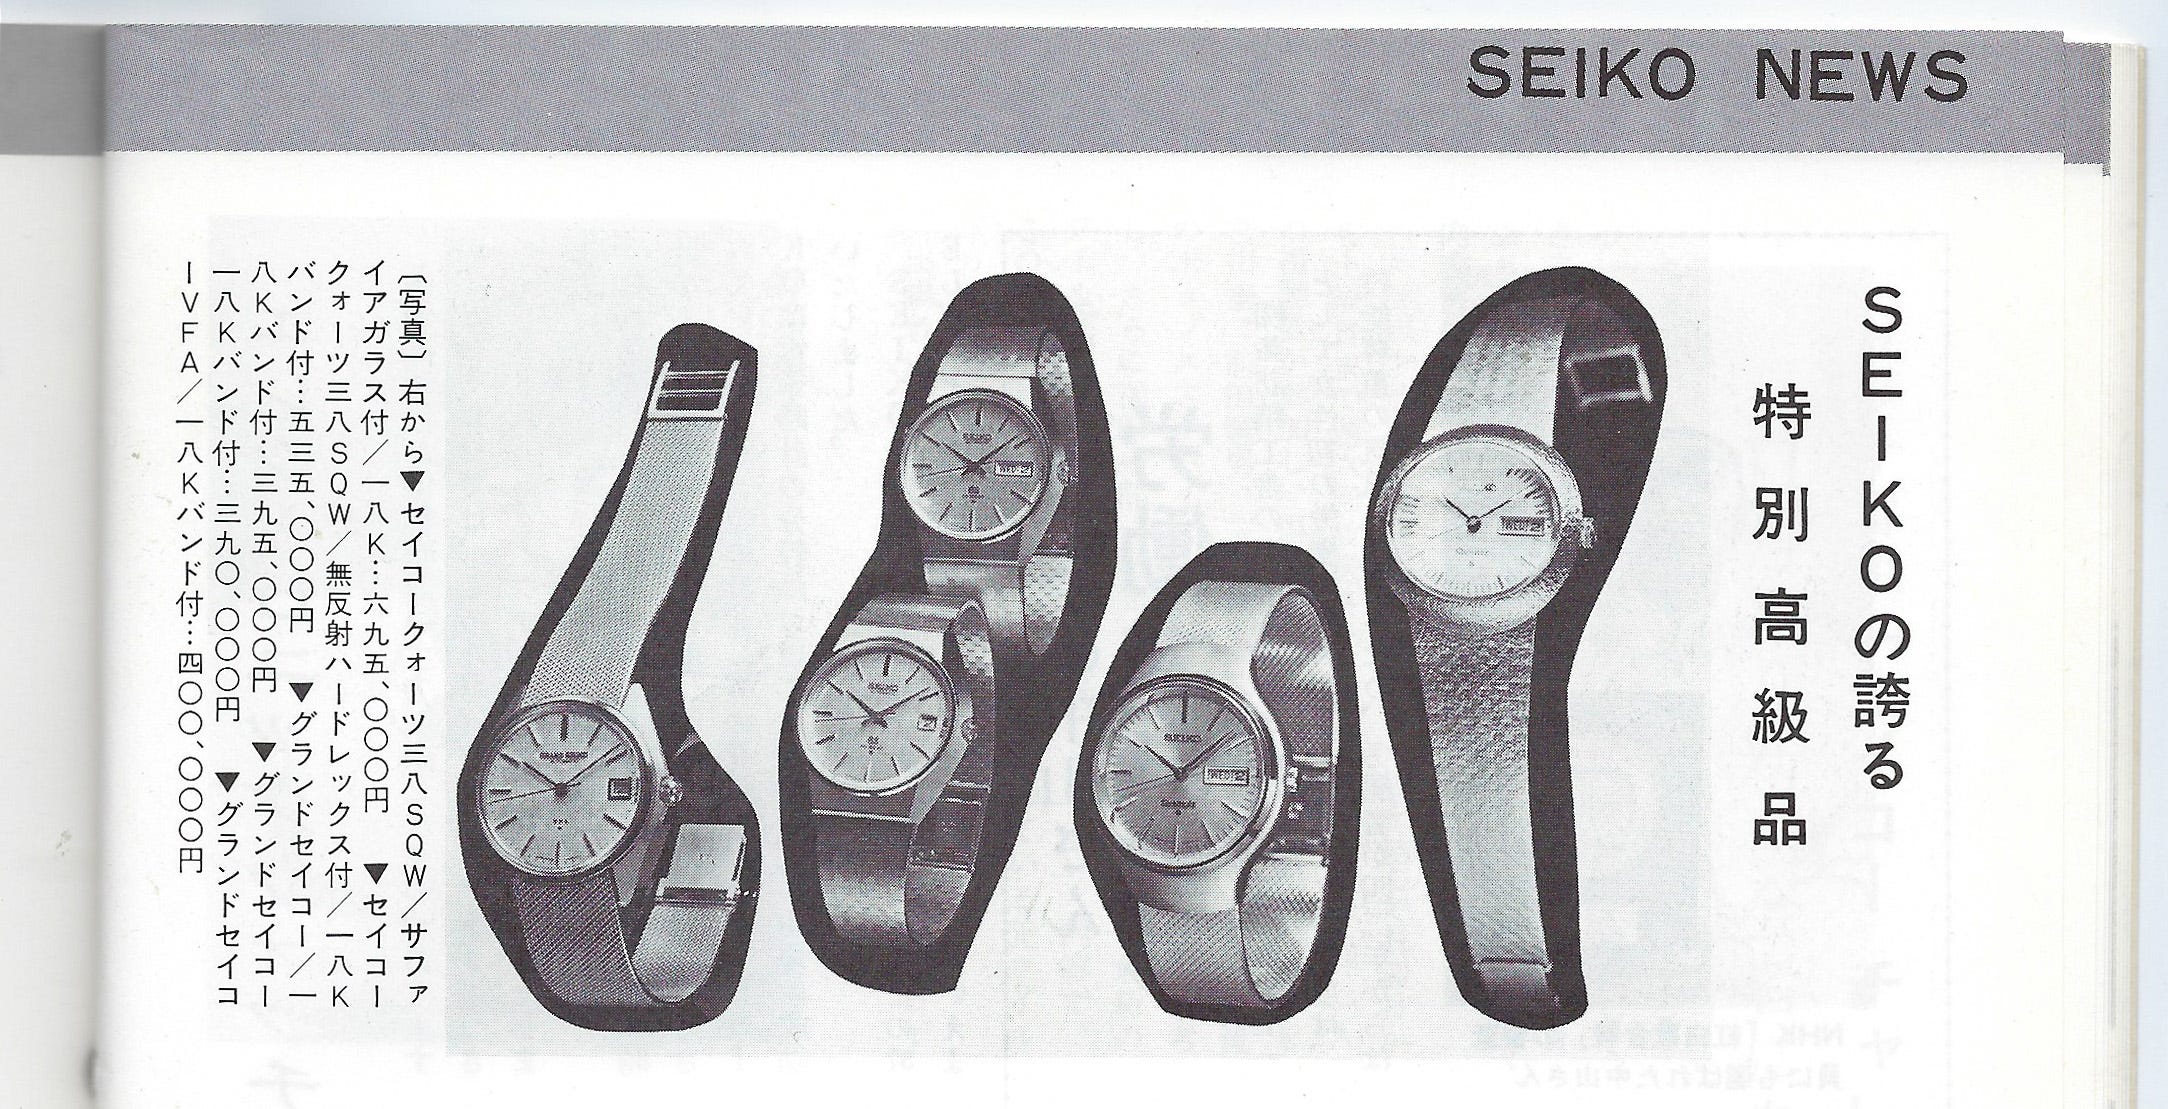 The Seiko 1971 Special Luxury Catalogue